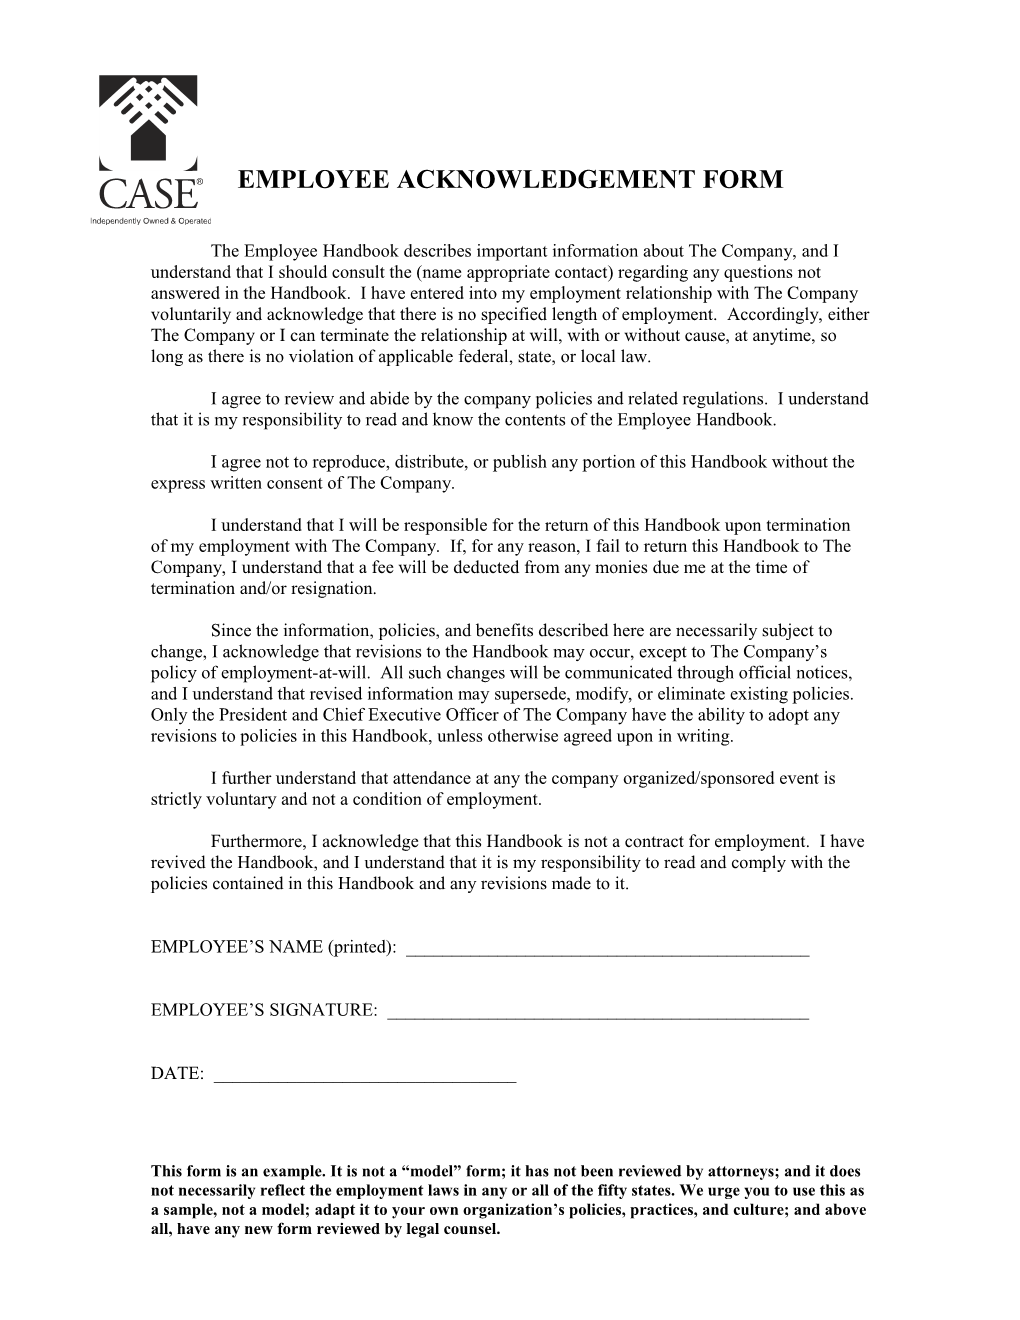 Employee Acknowledgement Form